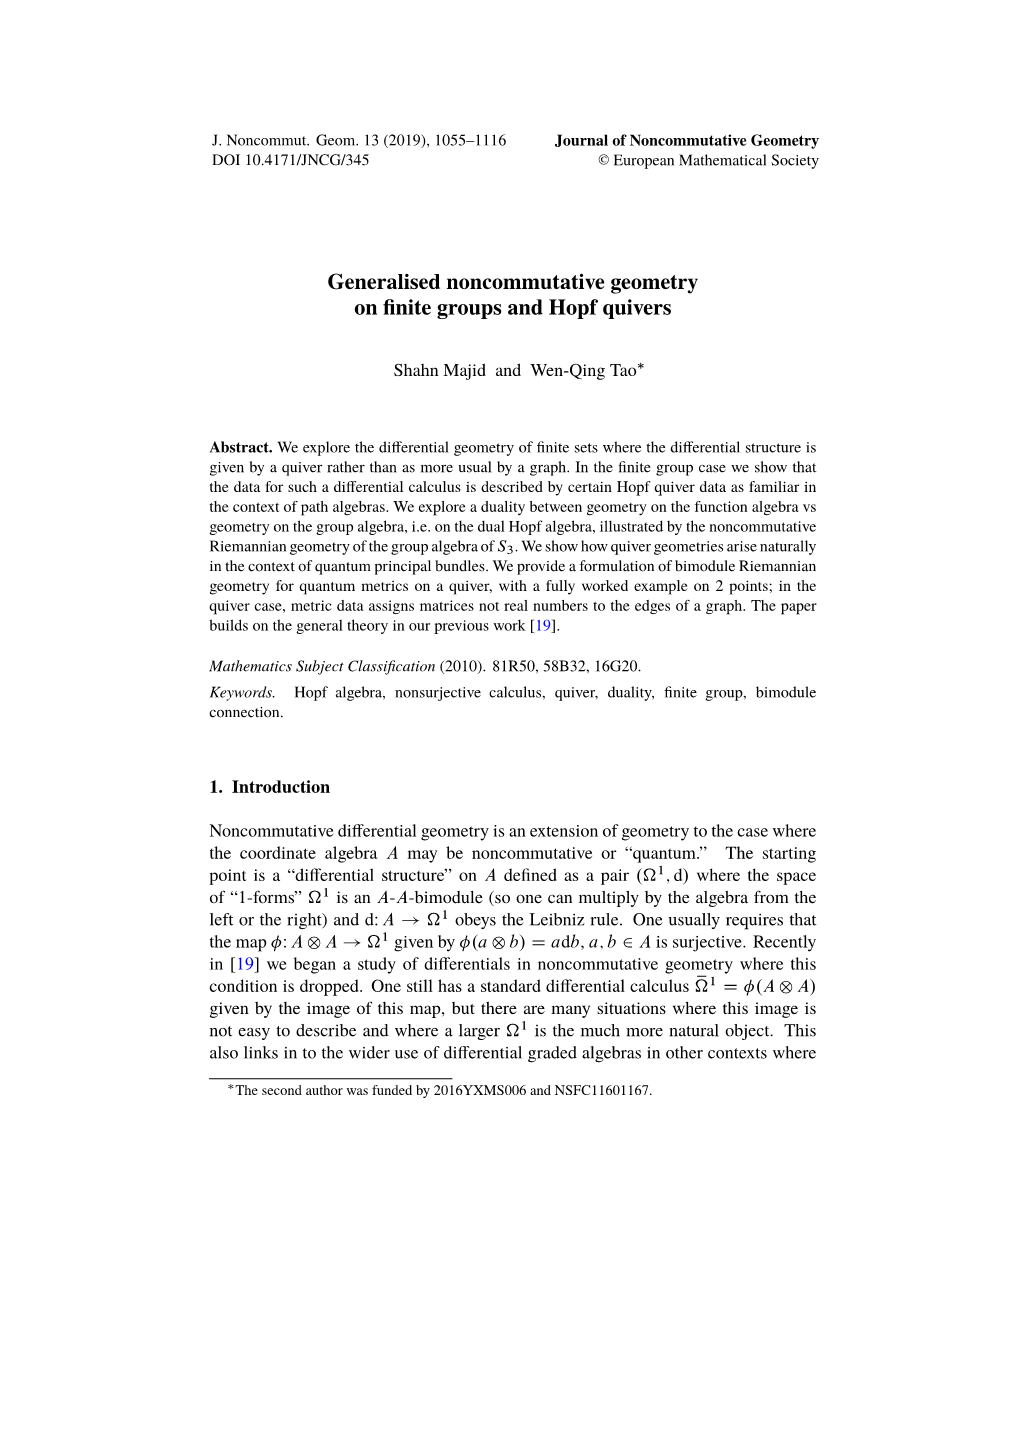 Generalised Noncommutative Geometry on Finite Groups and Hopf